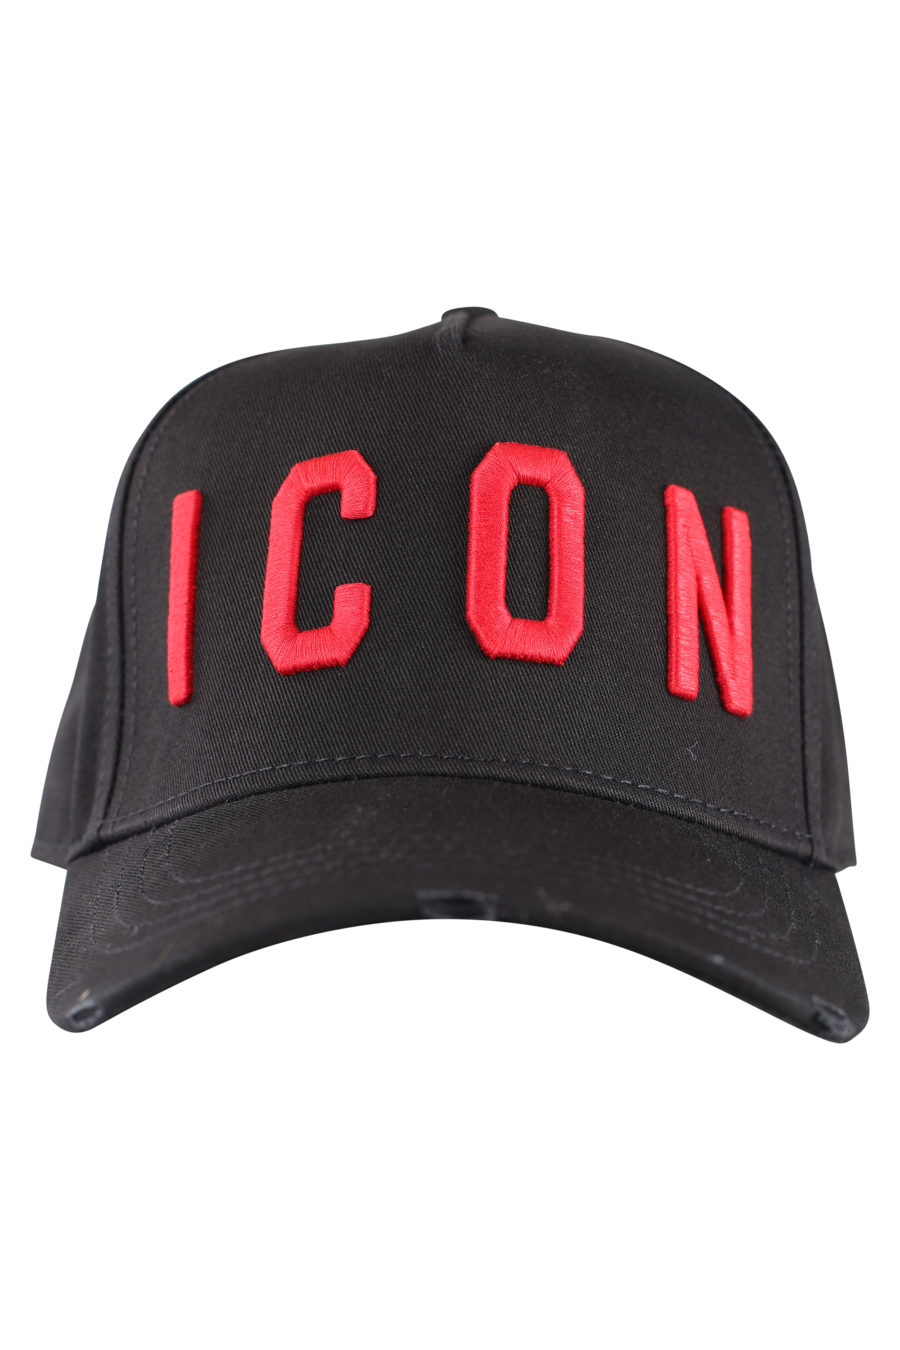 Gorra negra con logo "icon" rojo - IMG 9964